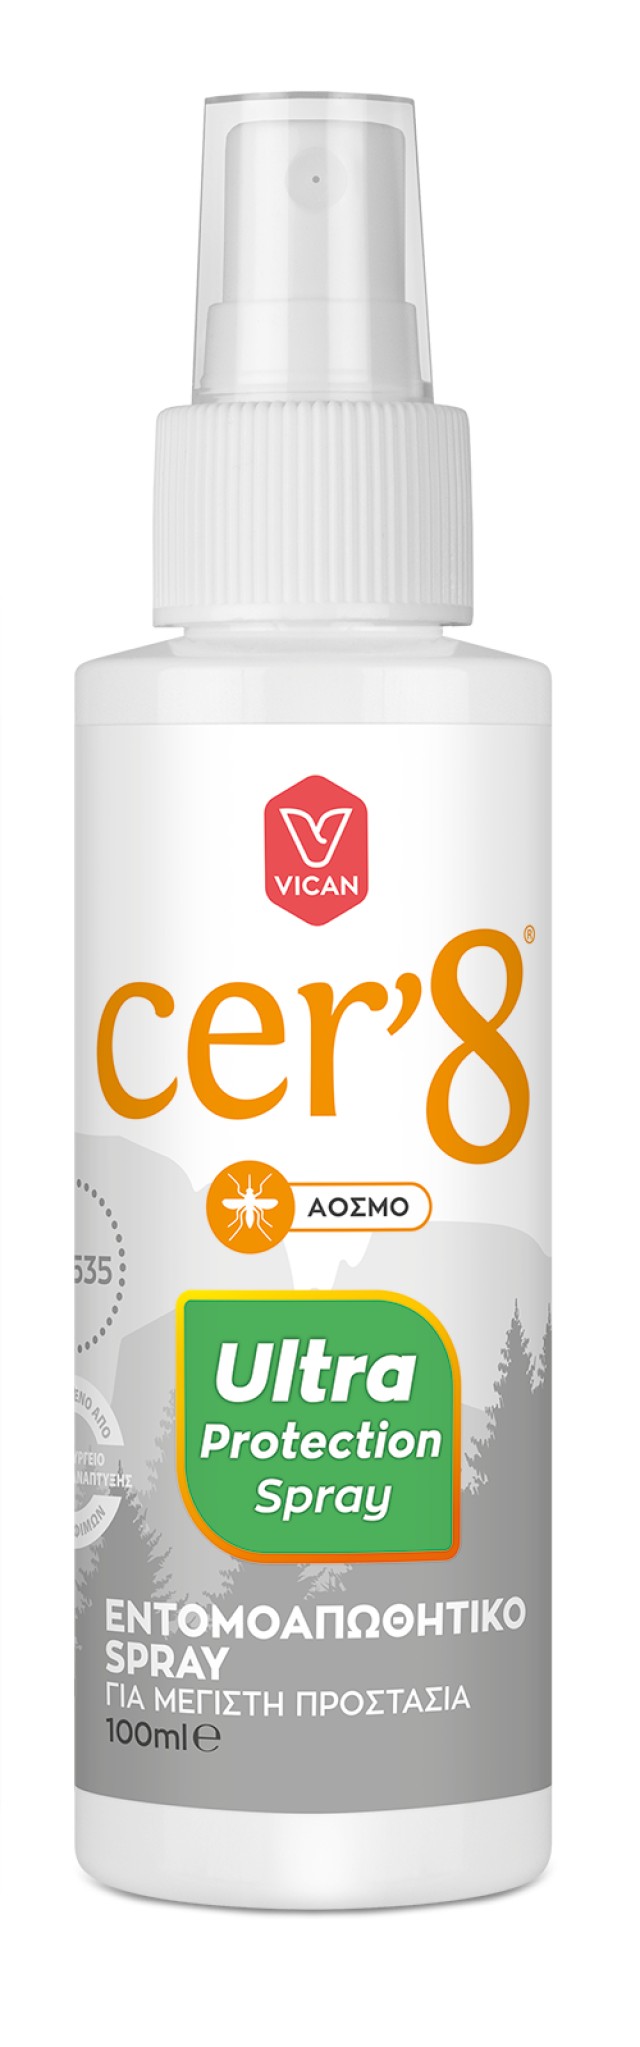 Vican Cer8 Ultra Protection Εντομοαπωθητικό Spray 100ml